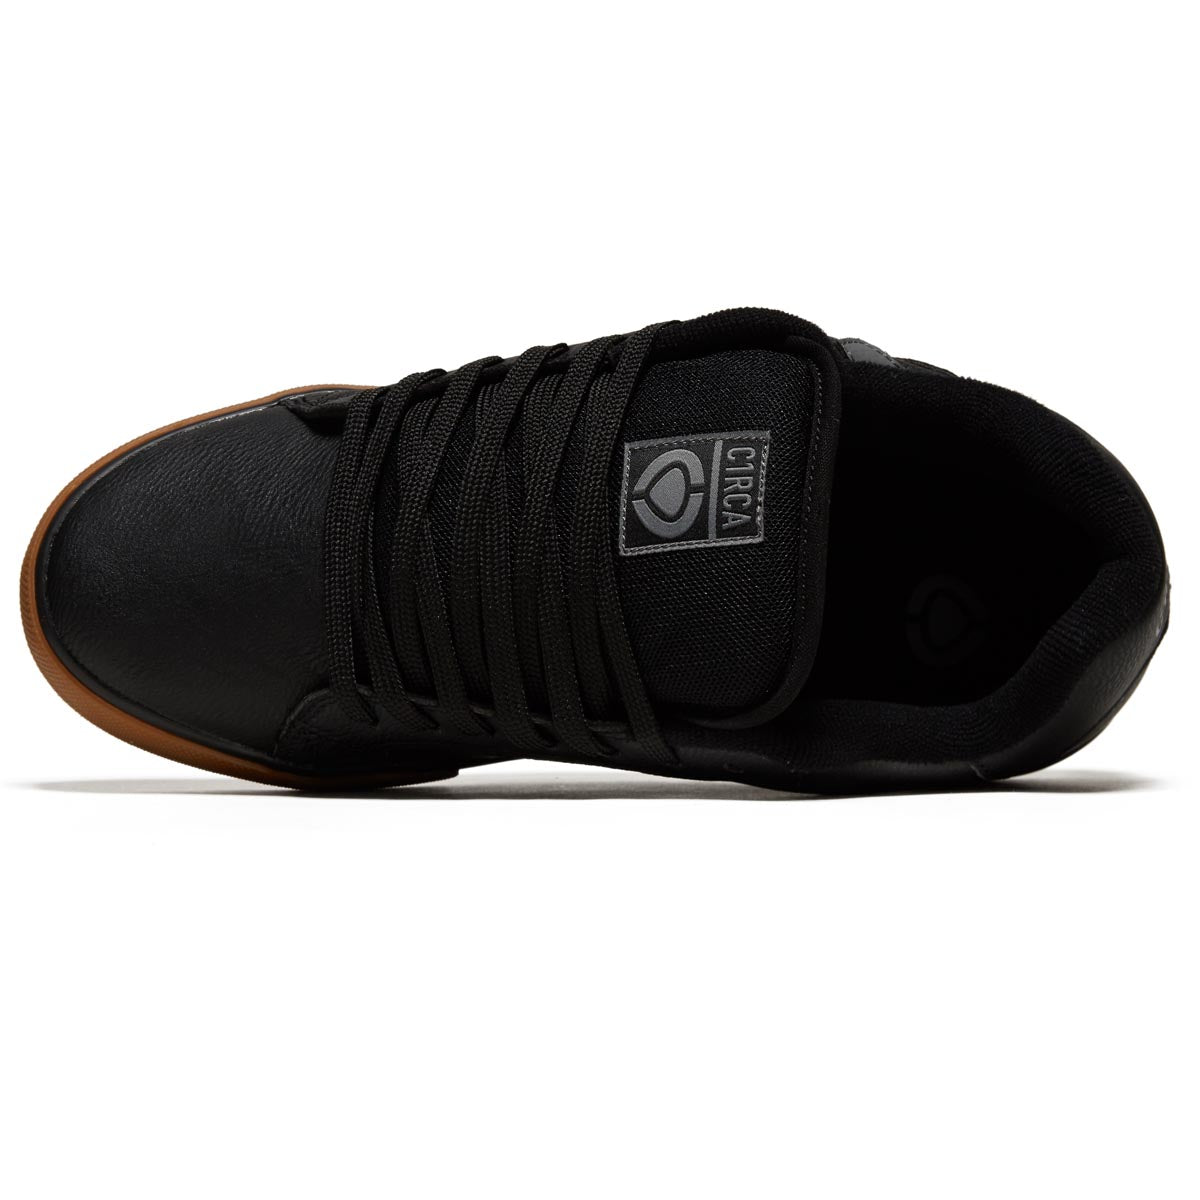 C1rca 211 Vulc Bold Shoes - Black/Grey/Gum image 3